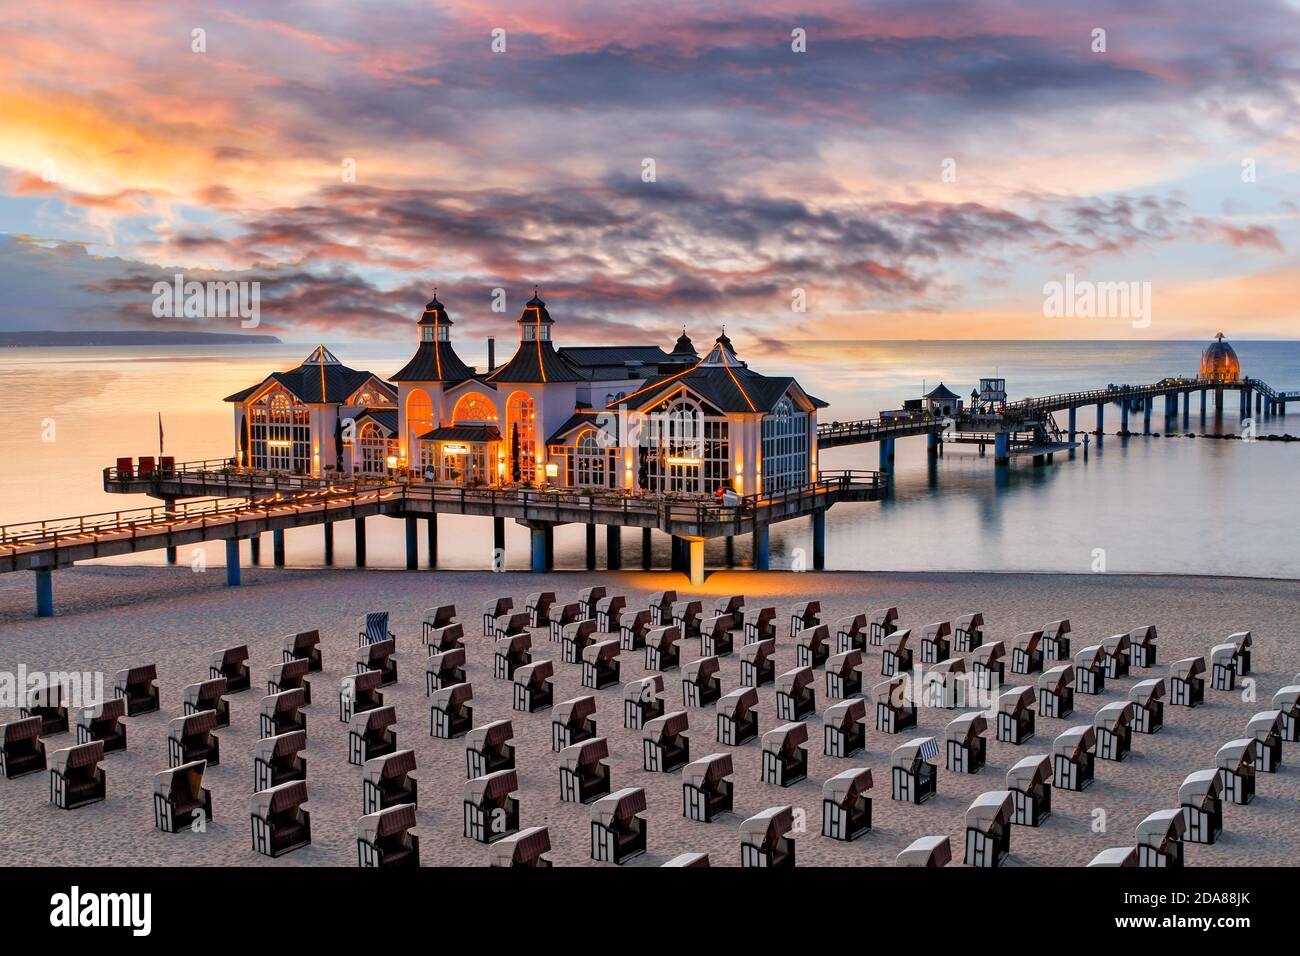 Sellin pier, Baltic Seaside Resort Sellin, Ruegen, Mecklenburg-Western Pomerania, Germany, Europe Stock Photo